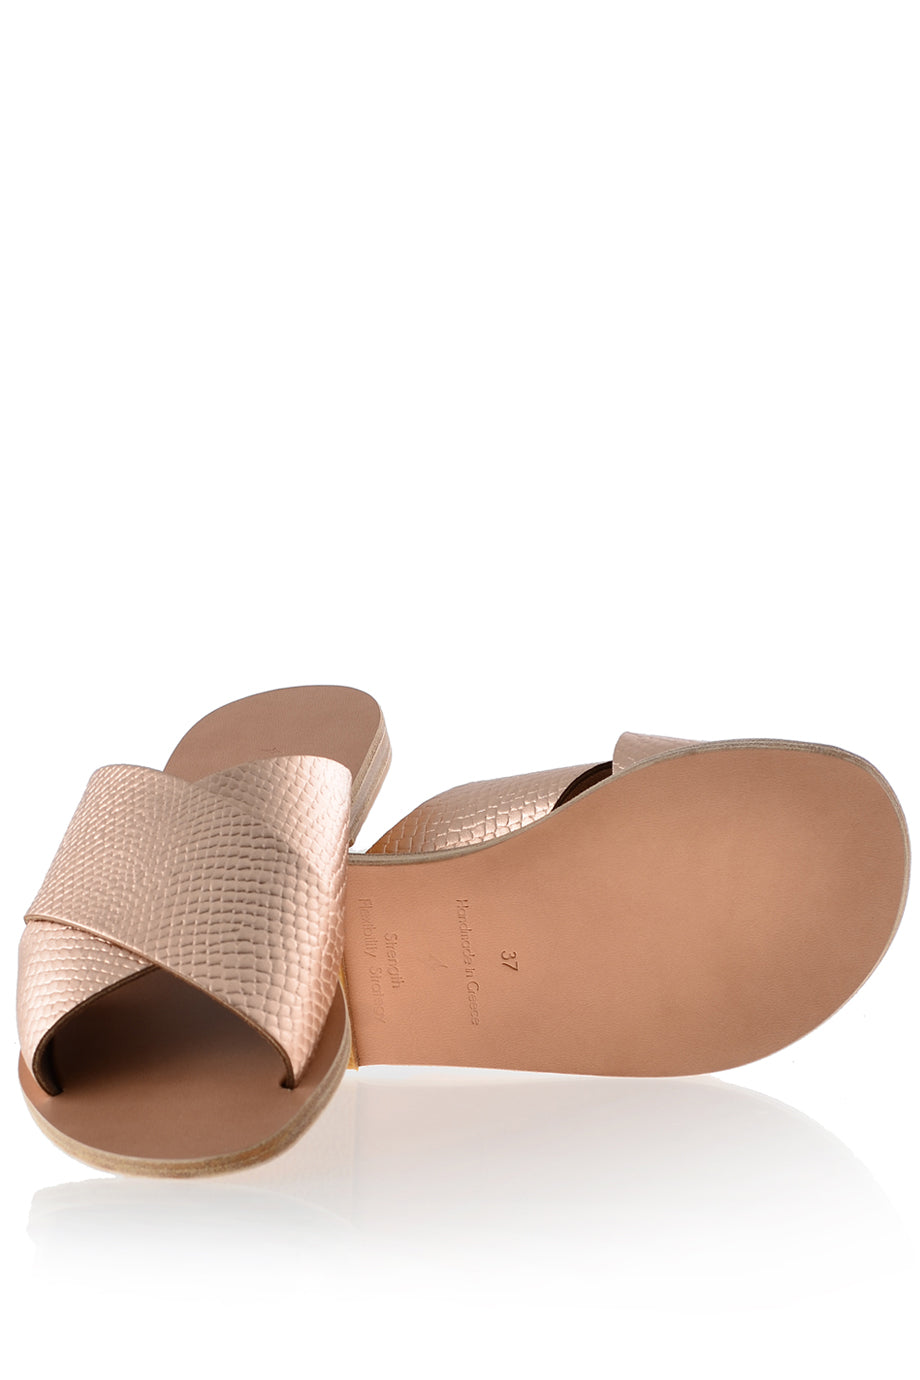 Hera Χειροποίητα Ανατομικά Δερμάτινα Σανδάλια Φίδι σε Ροζ Χρυσό - Graecus | Γυναικεία Παπούτσια